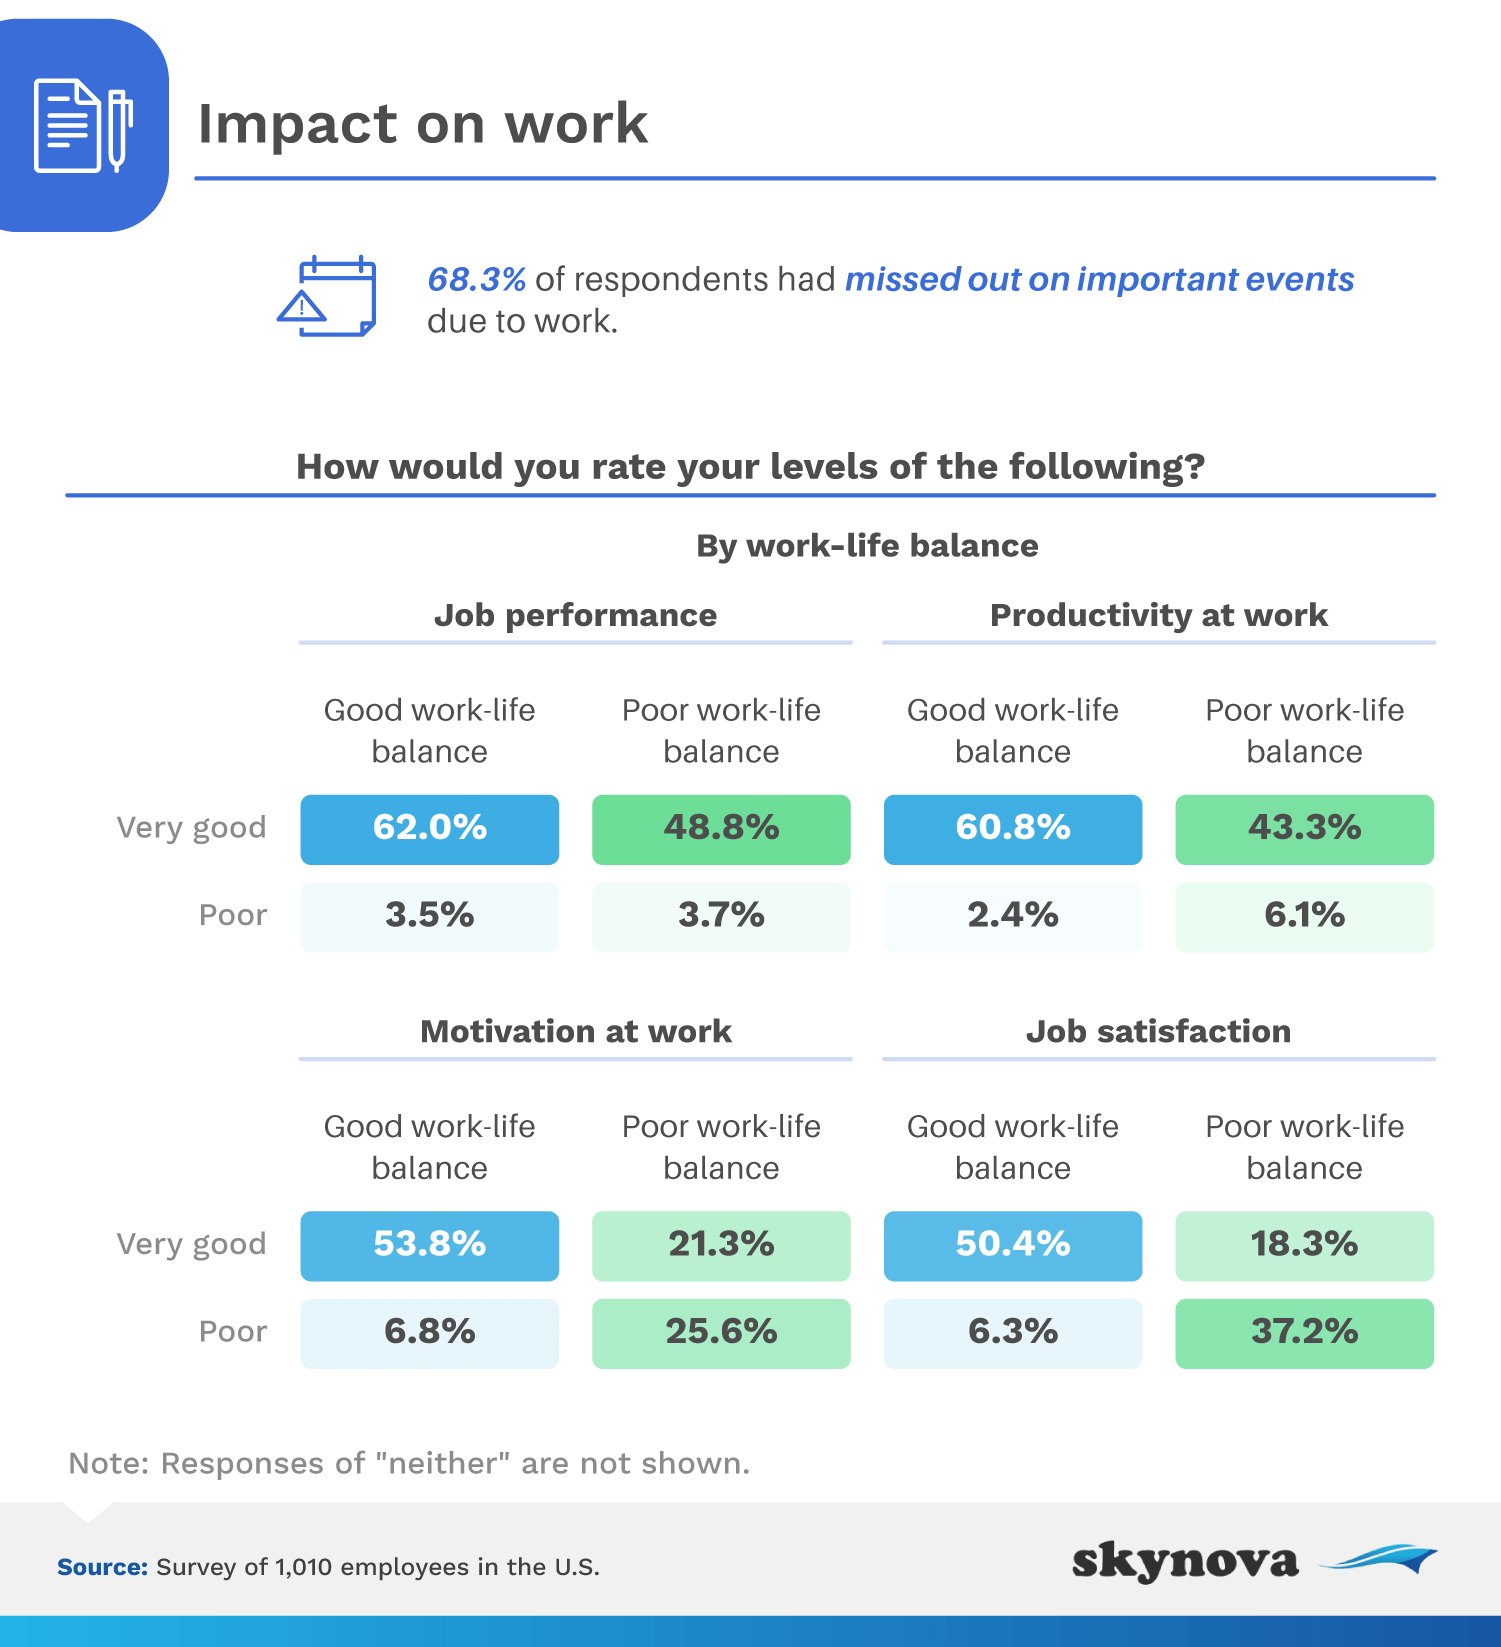 Impact on Work